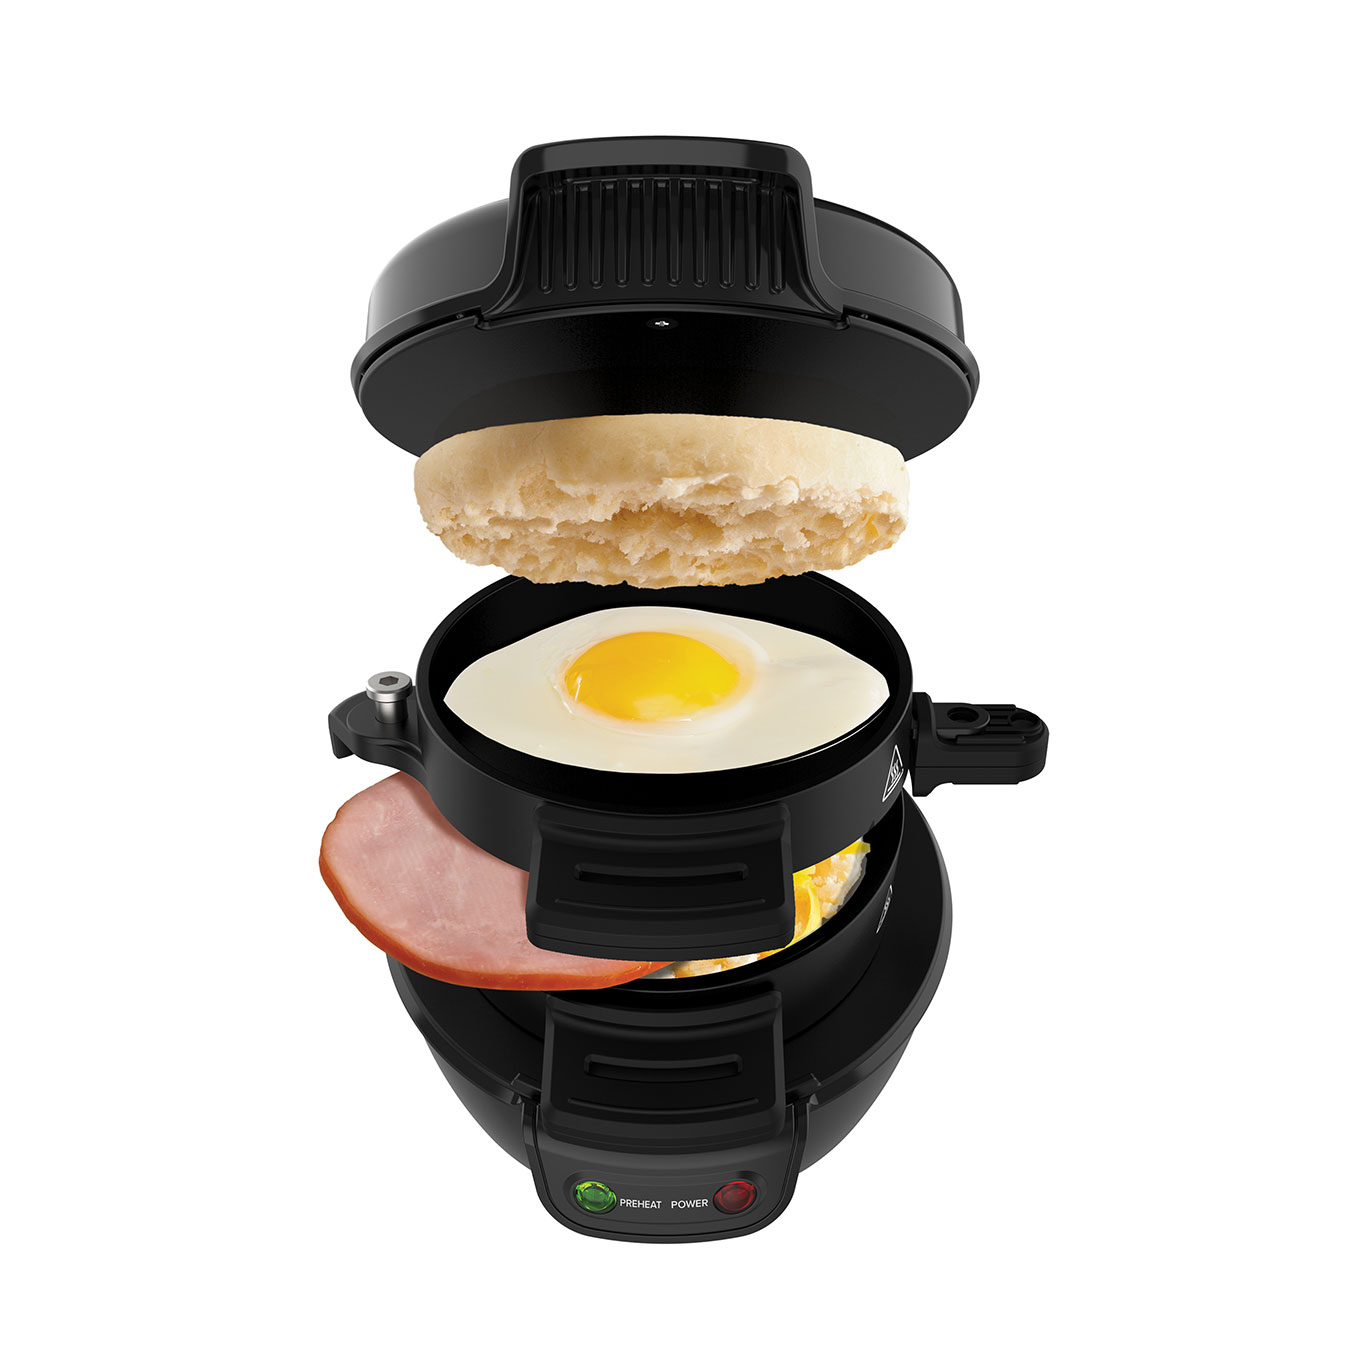 View Breakfast Sandwich Maker by DrewCole 2 Pack information